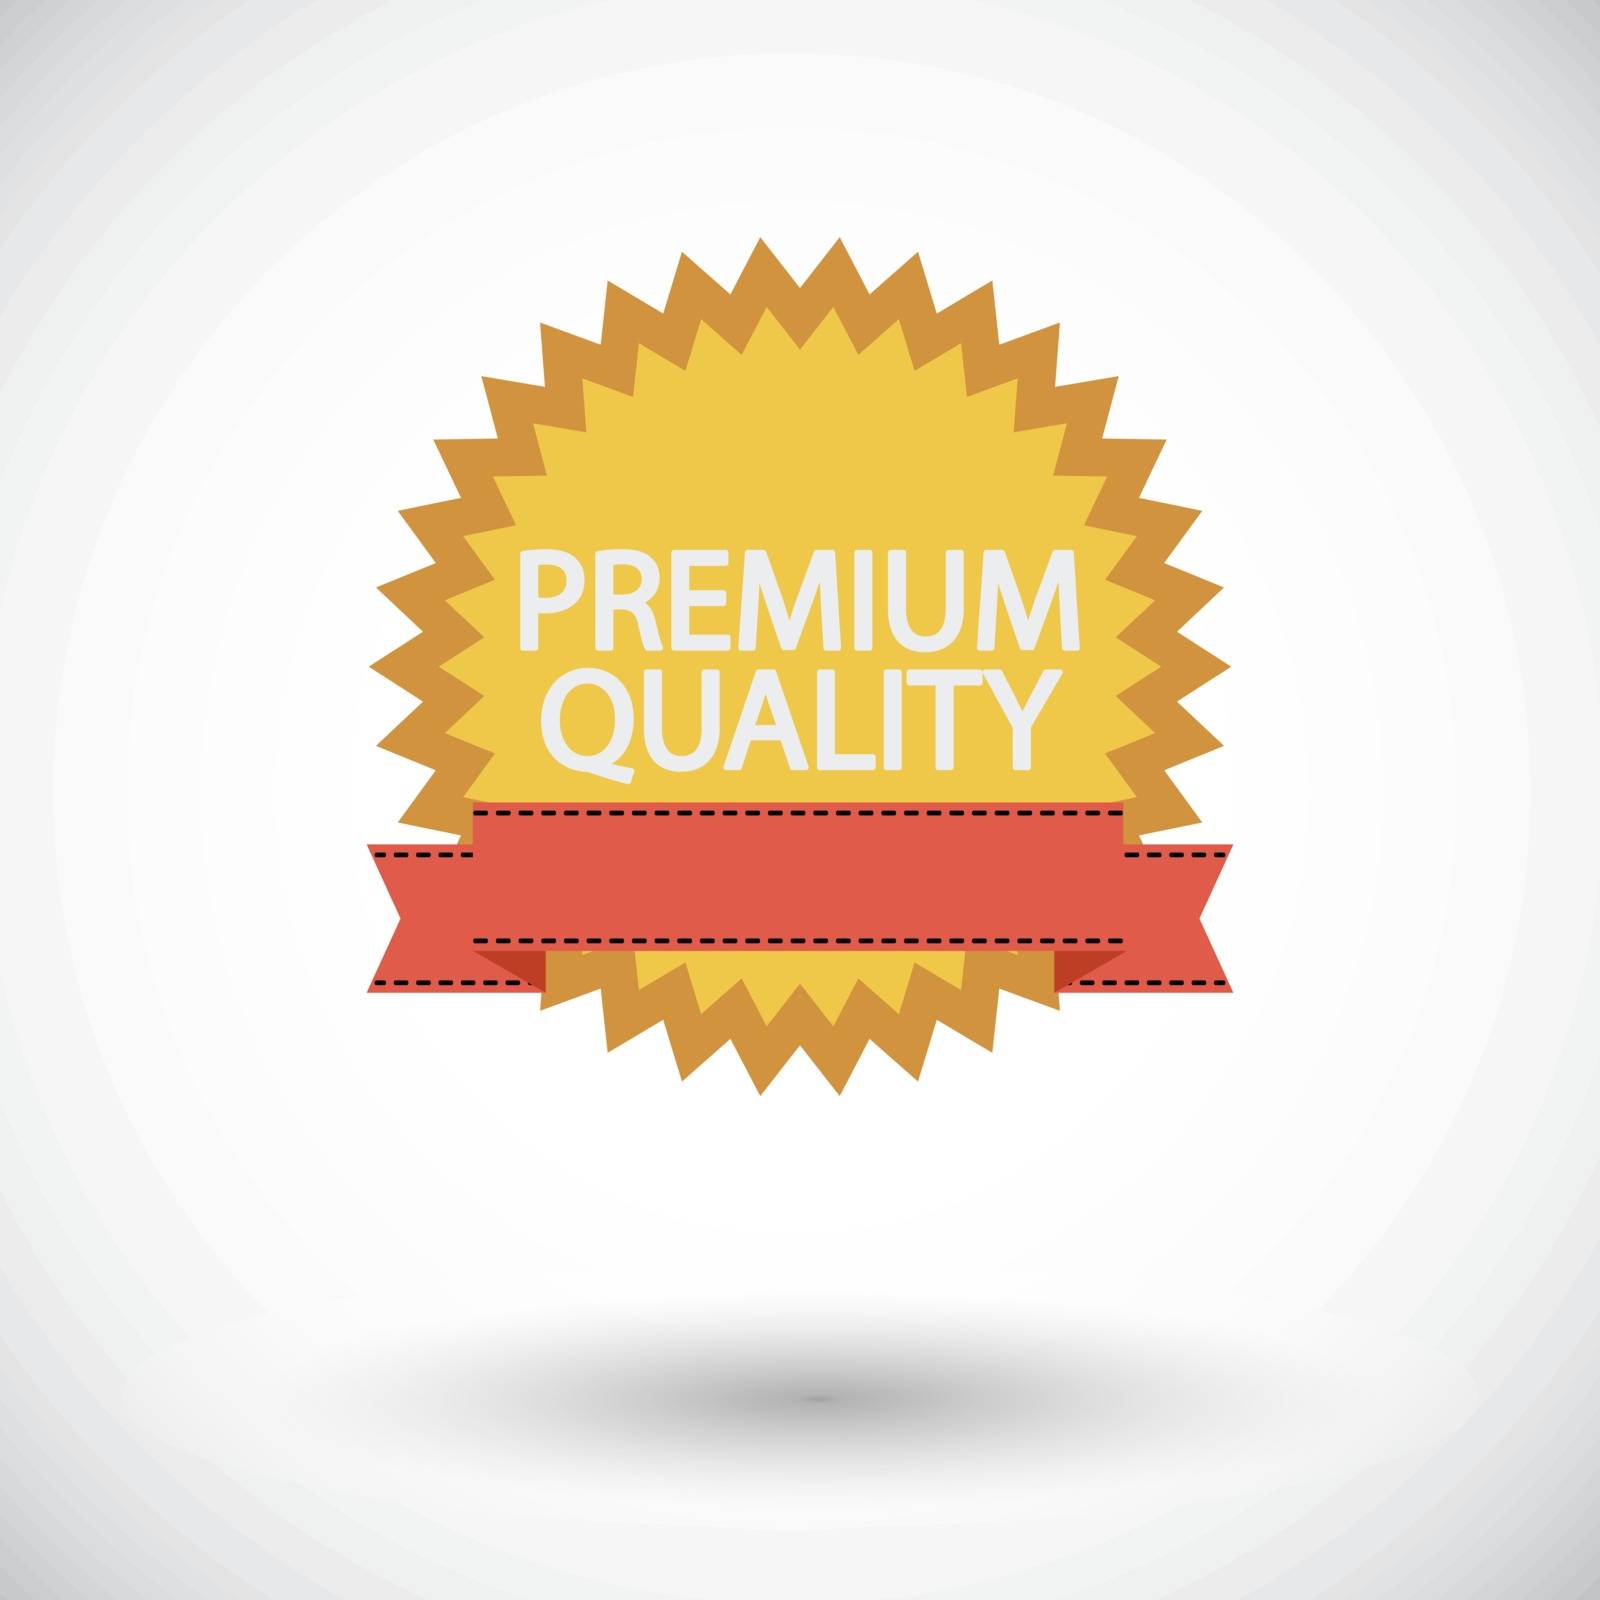 Premium Quality by smoki